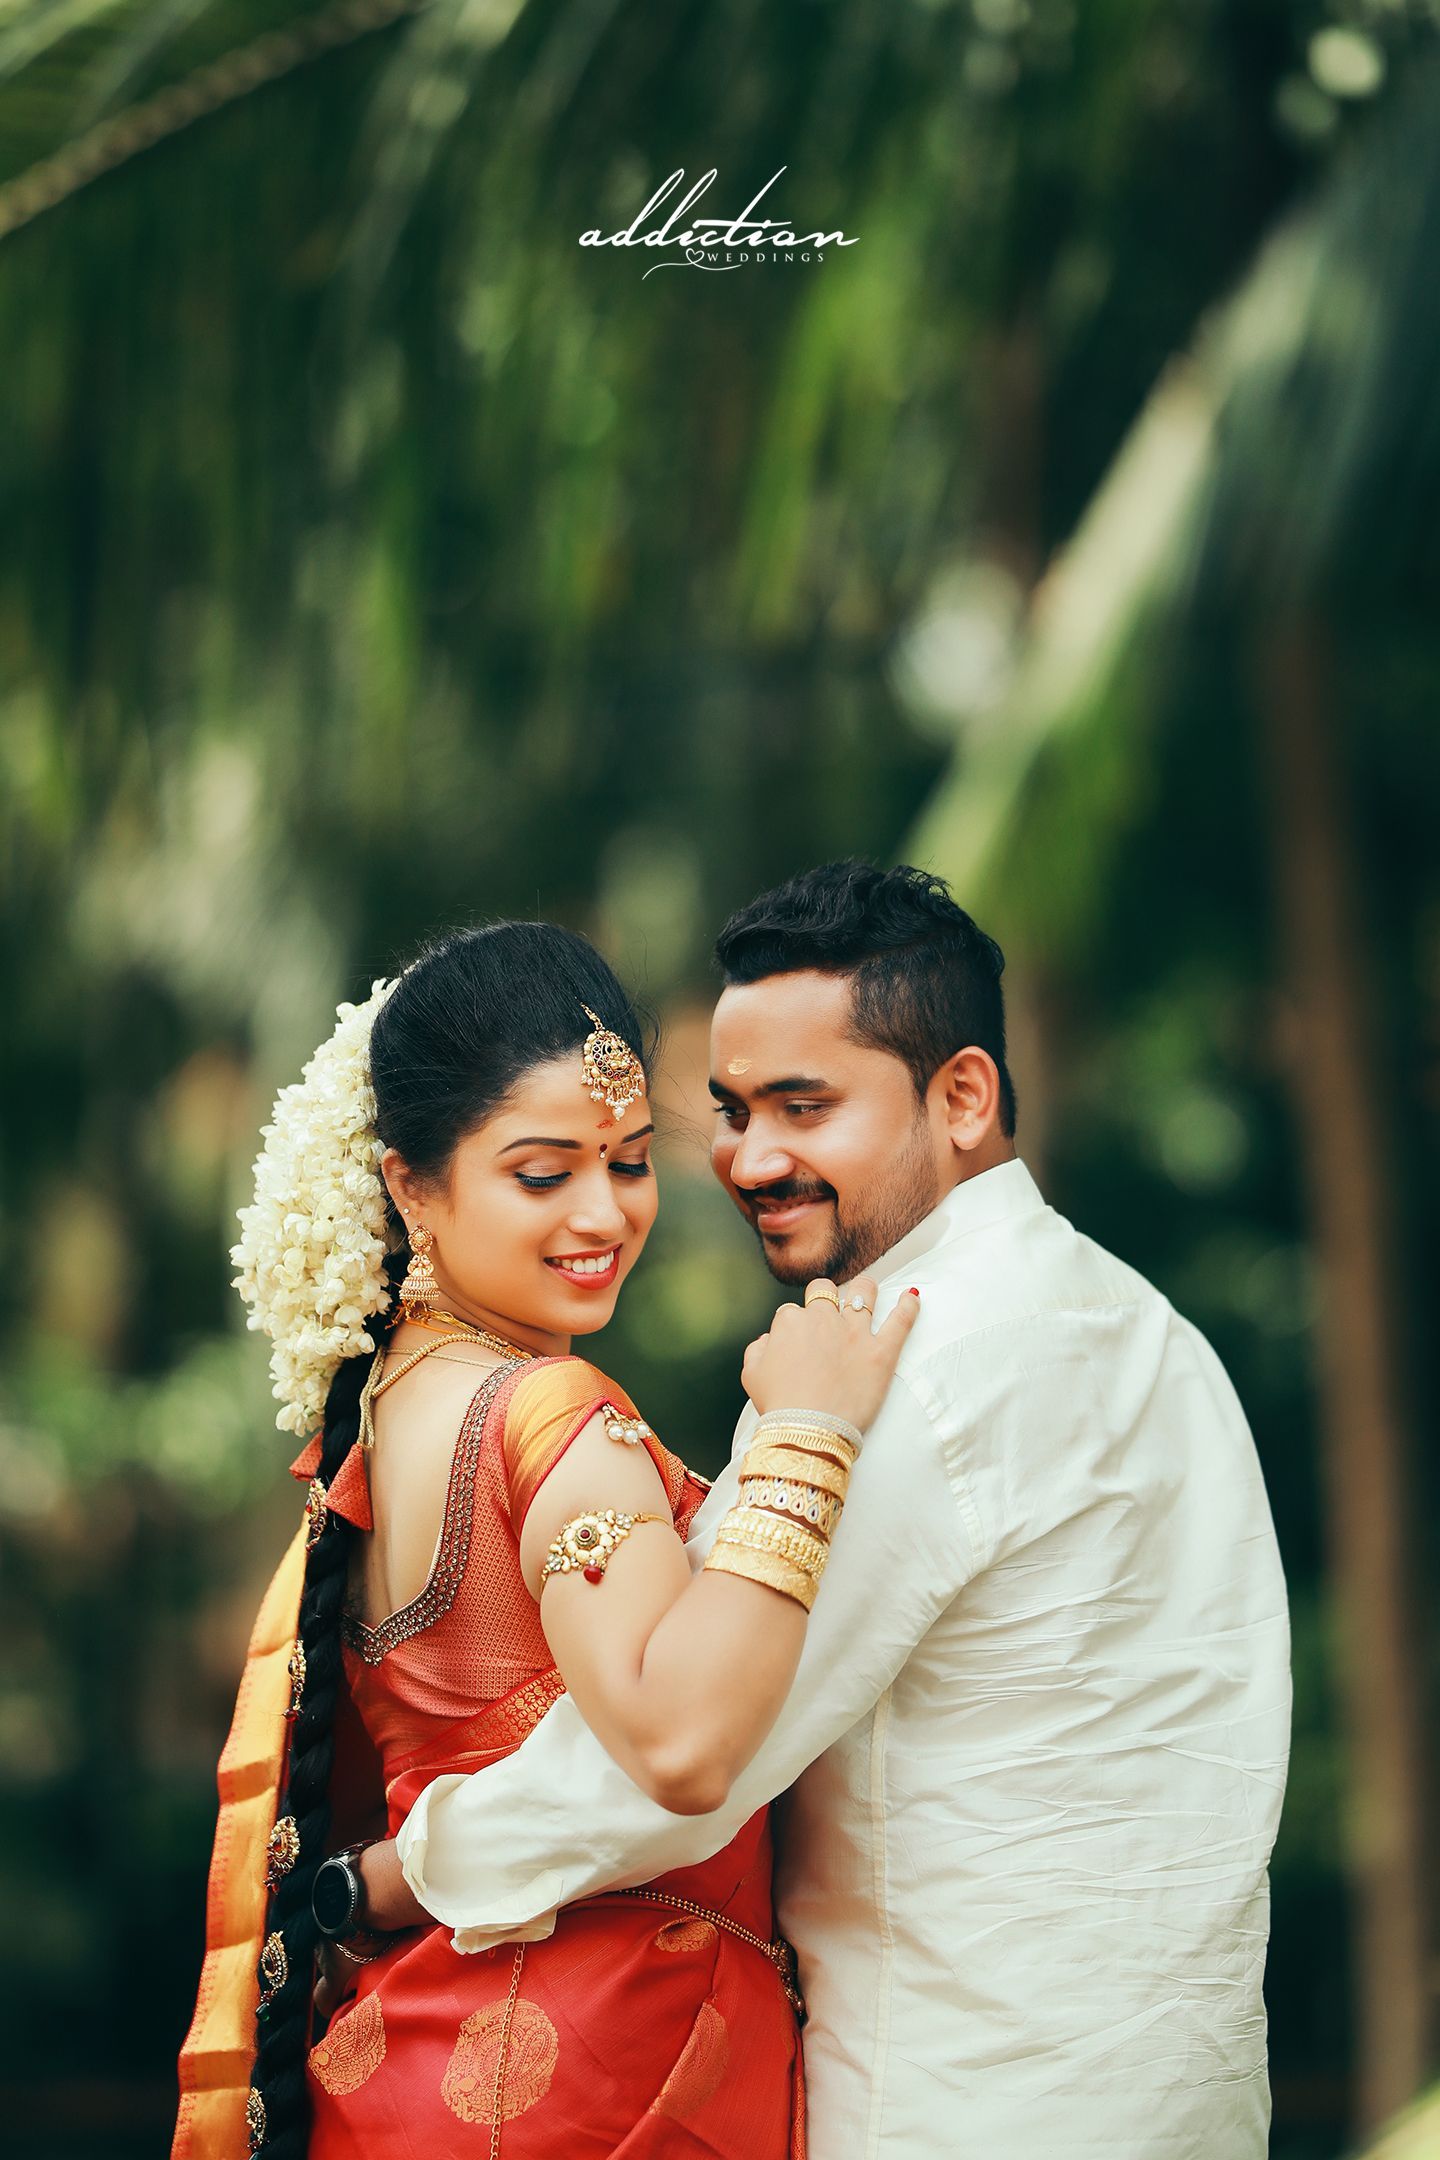 Kerala Wedding Photography Cute Couple. Indian wedding couple photography, Indian wedding photography poses, Indian wedding photography couples